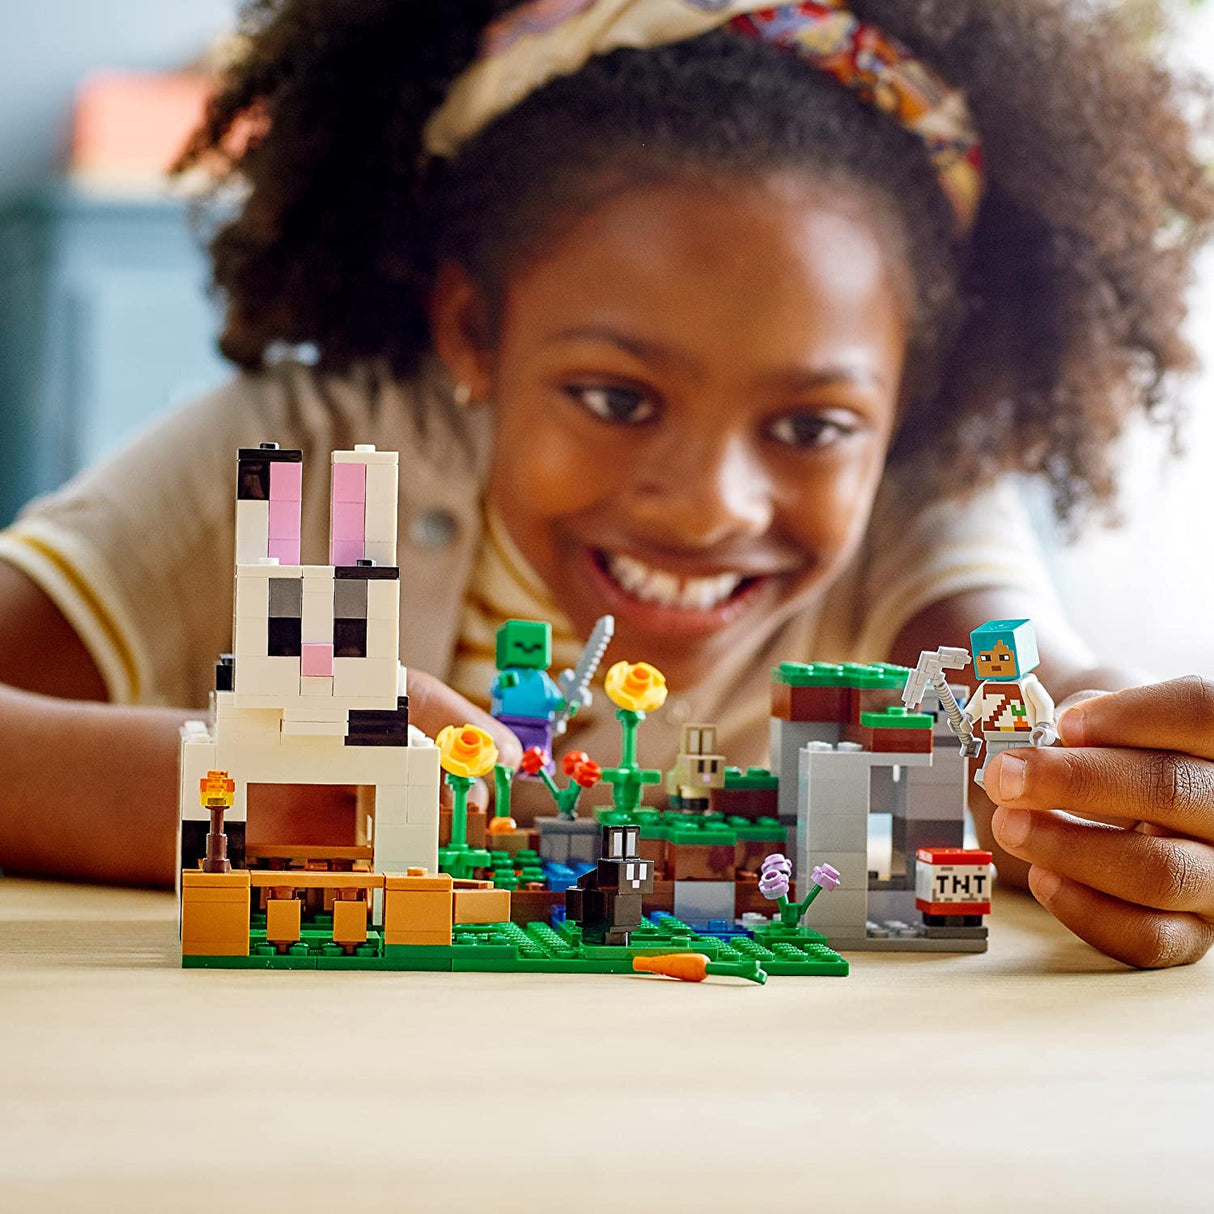 LEGO 21181 Minecraft The Rabbit Ranch House Farm